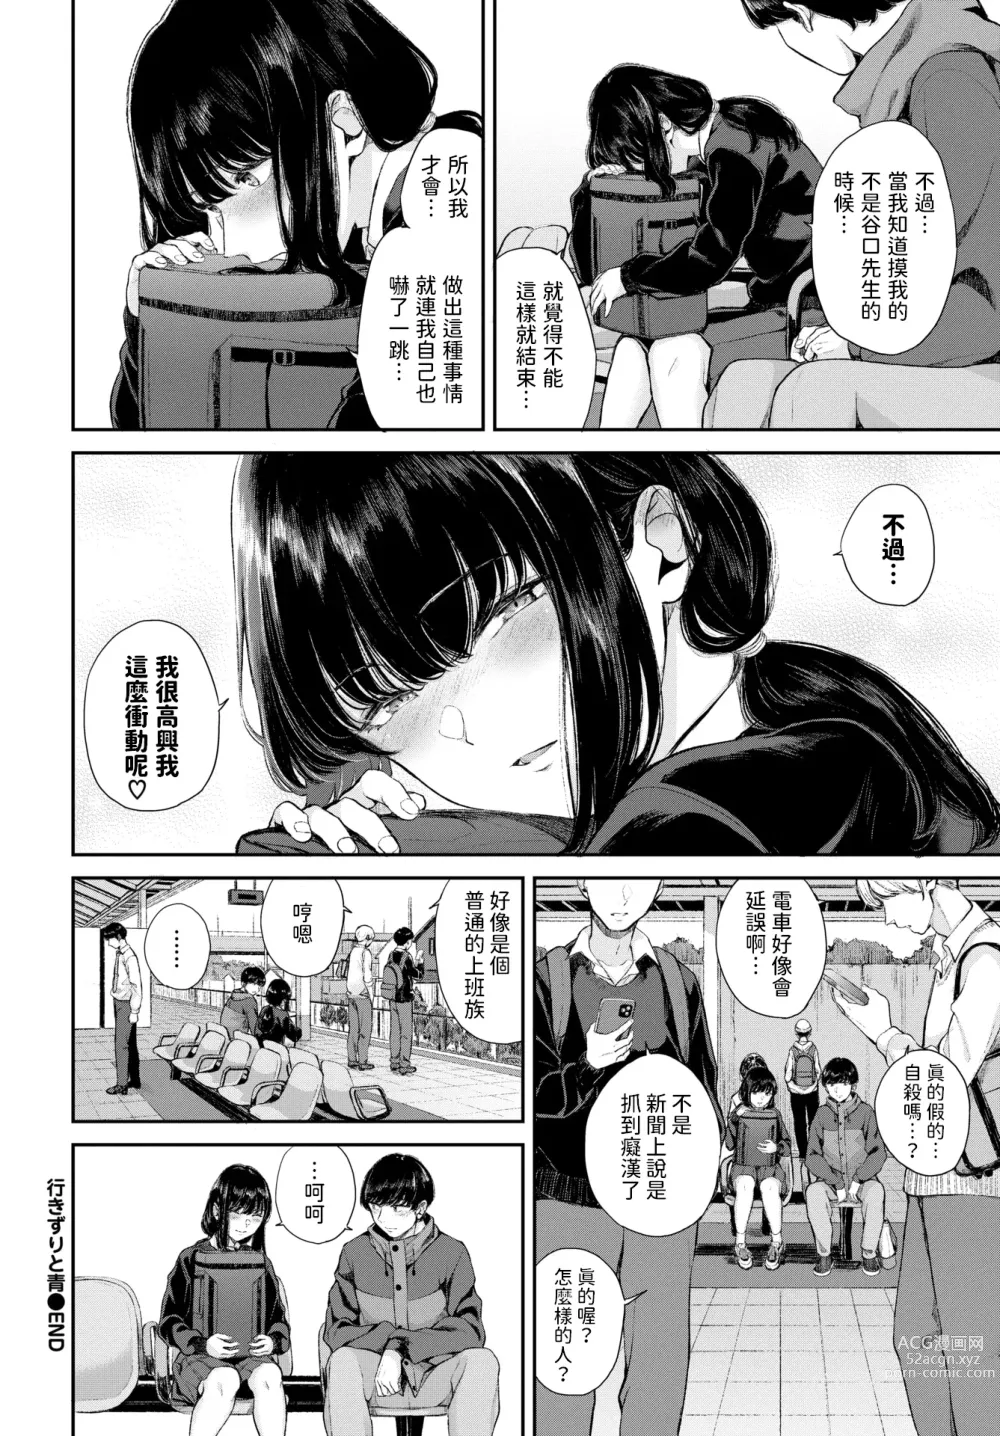 Page 24 of manga Yuki Zuri to Ao - passing by and blue.